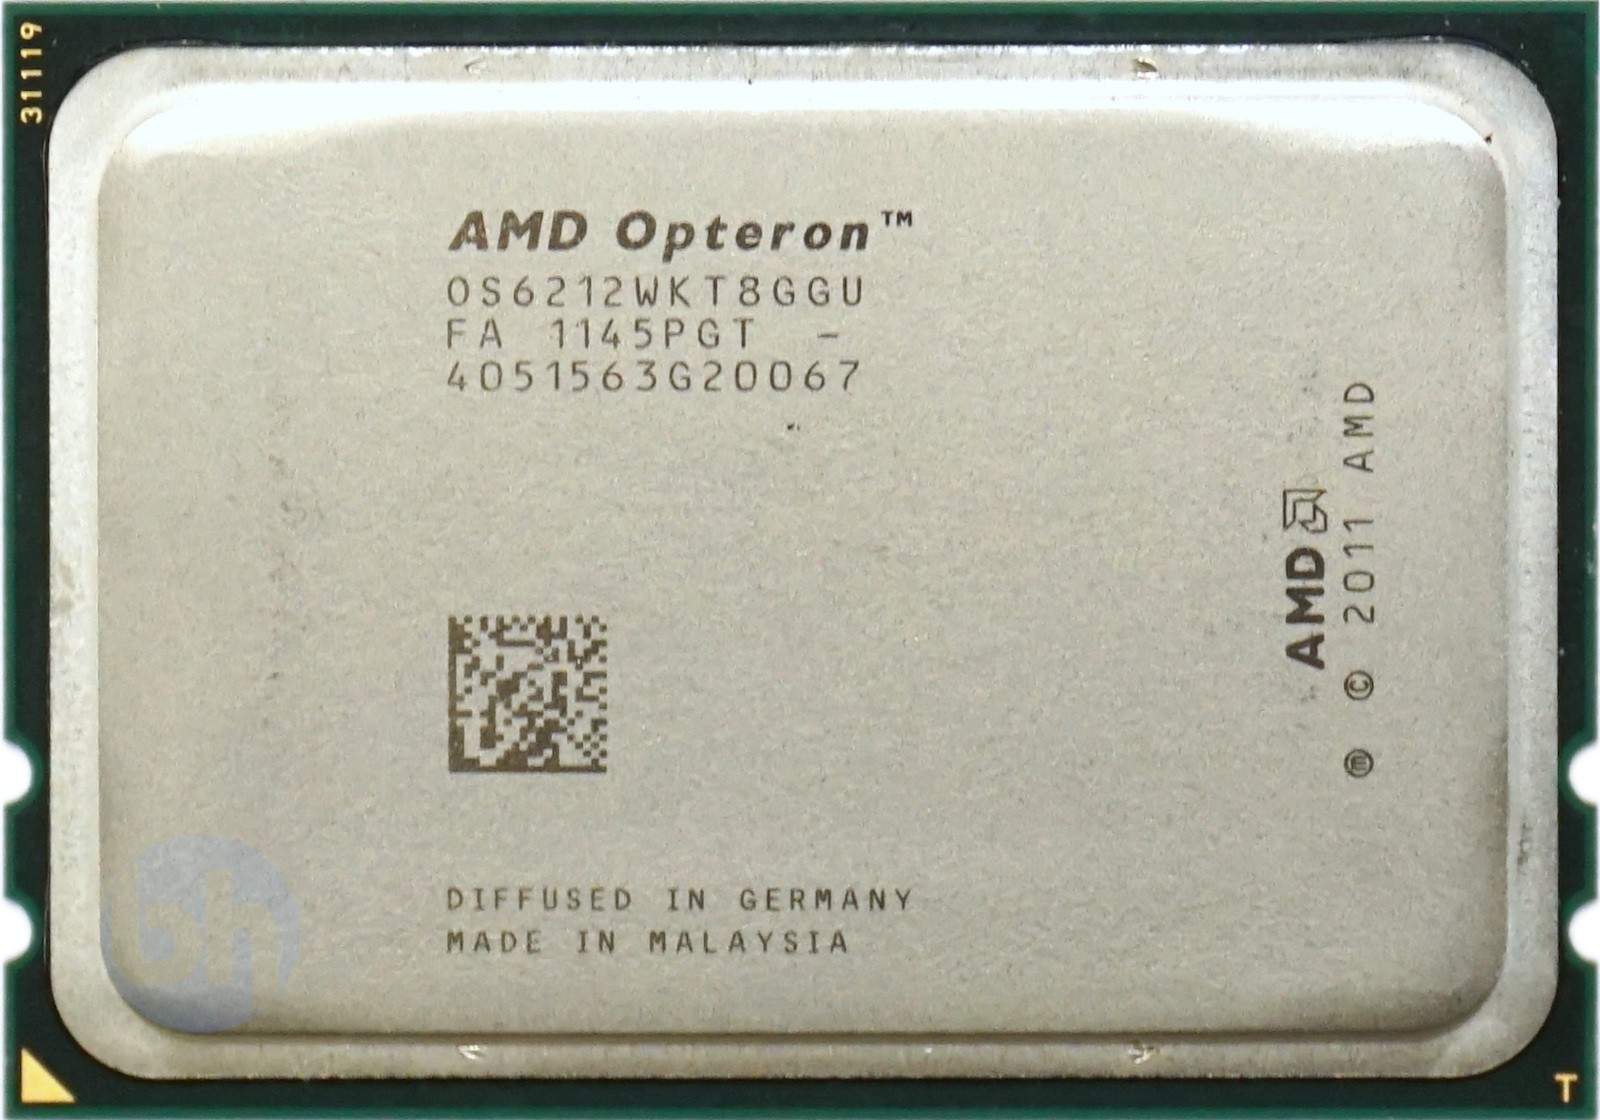 AMD Opteron 6212 (OS6212WKT8GGU) - 8-Core 2.60GHz Socket G34 16MB 115W CPU